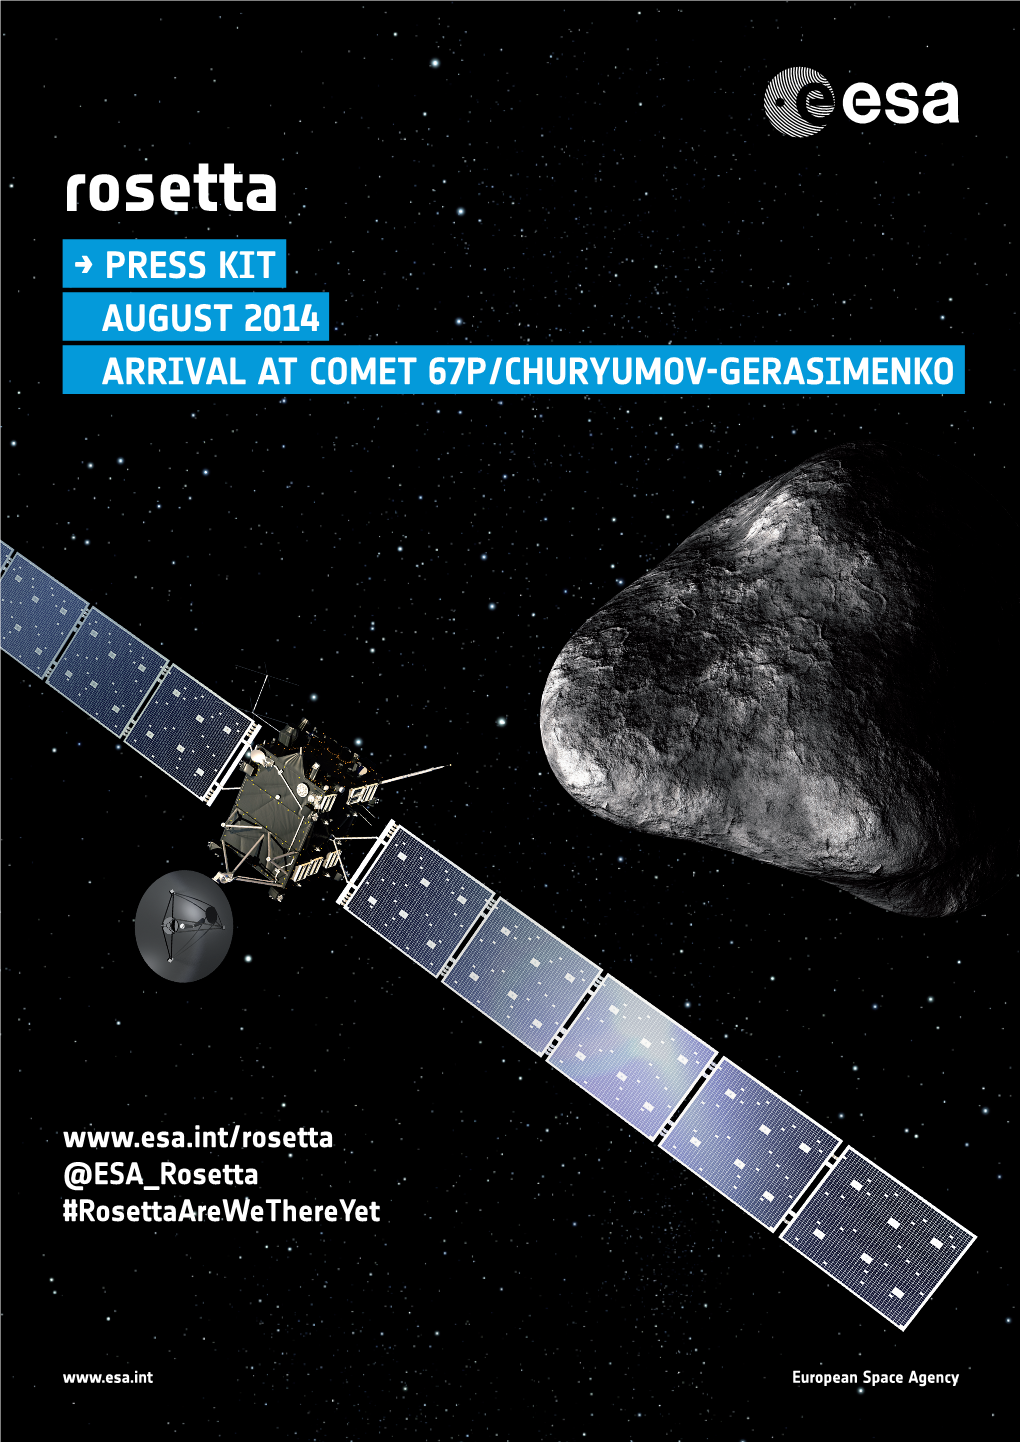 Rosetta → PRESS KIT AUGUST 2014 ARRIVAL at COMET 67P/CHURYUMOV-GERASIMENKO